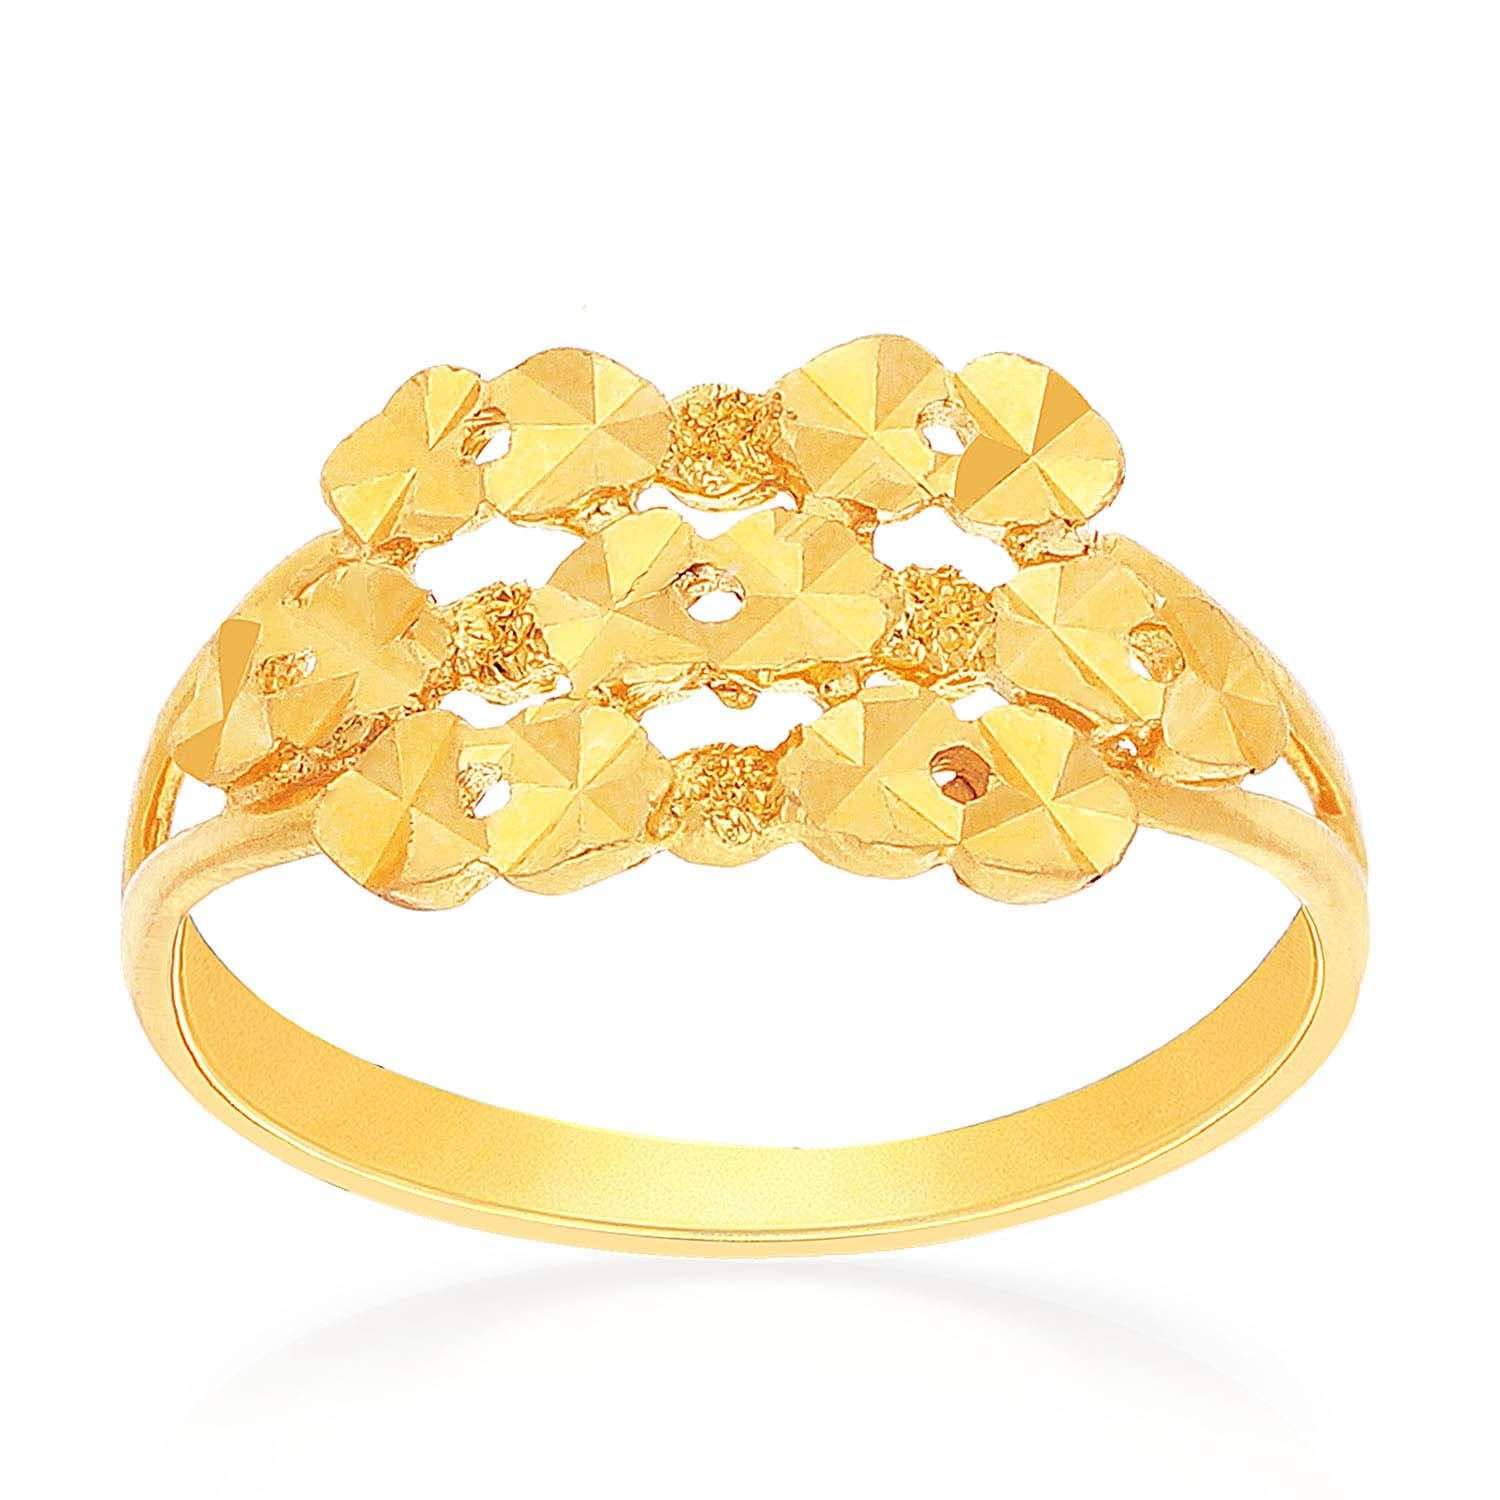 Buy Malabar Gold Ring USRG309174 for Women Online | Malabar Gold & Diamonds